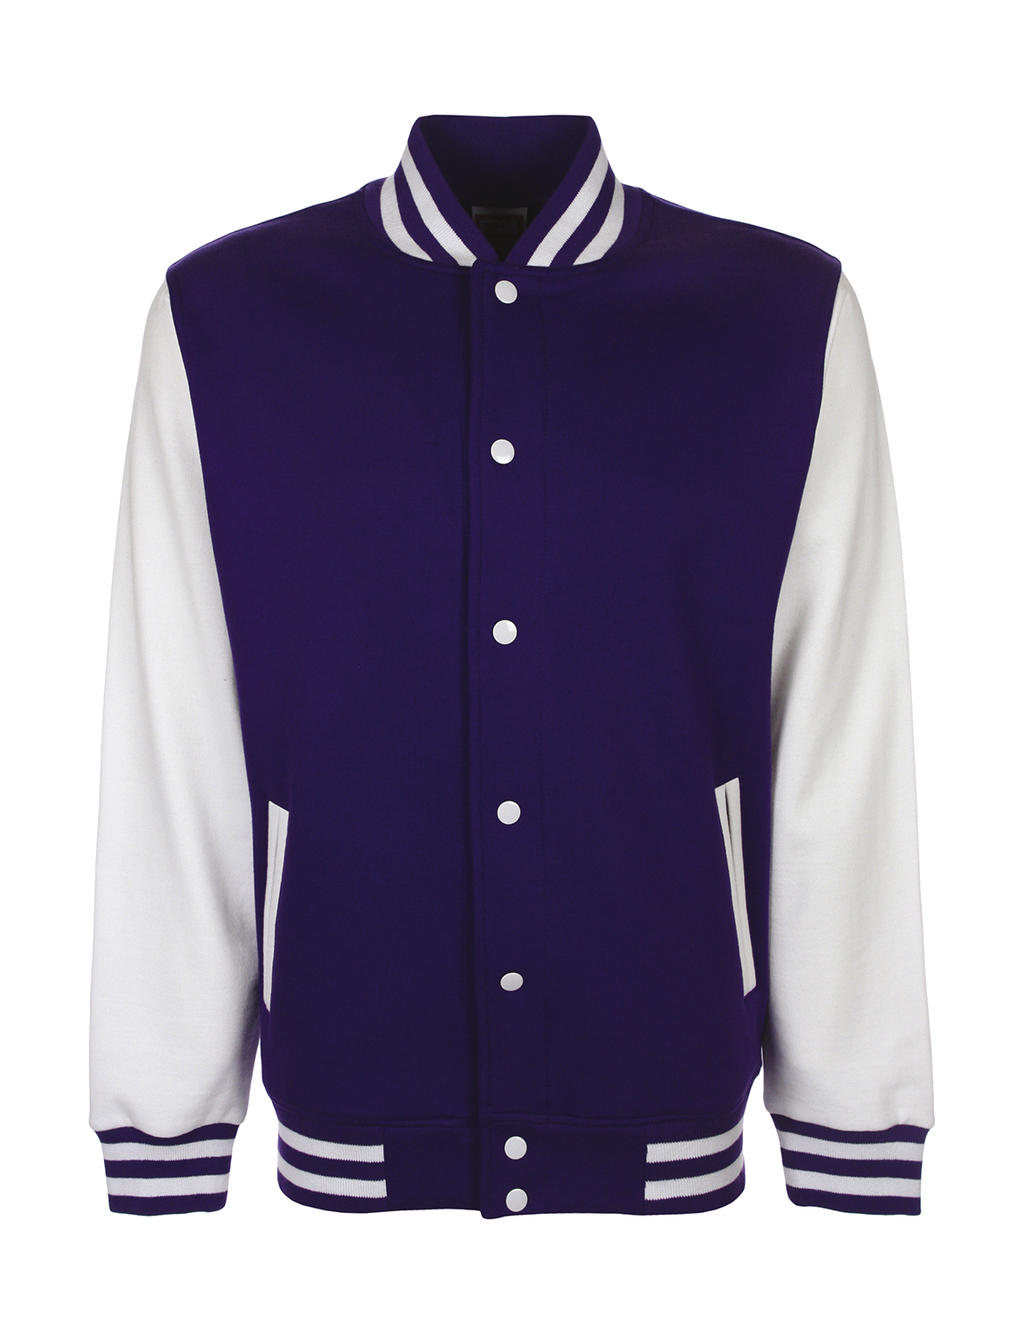 Univerzitná bunda - purple/white